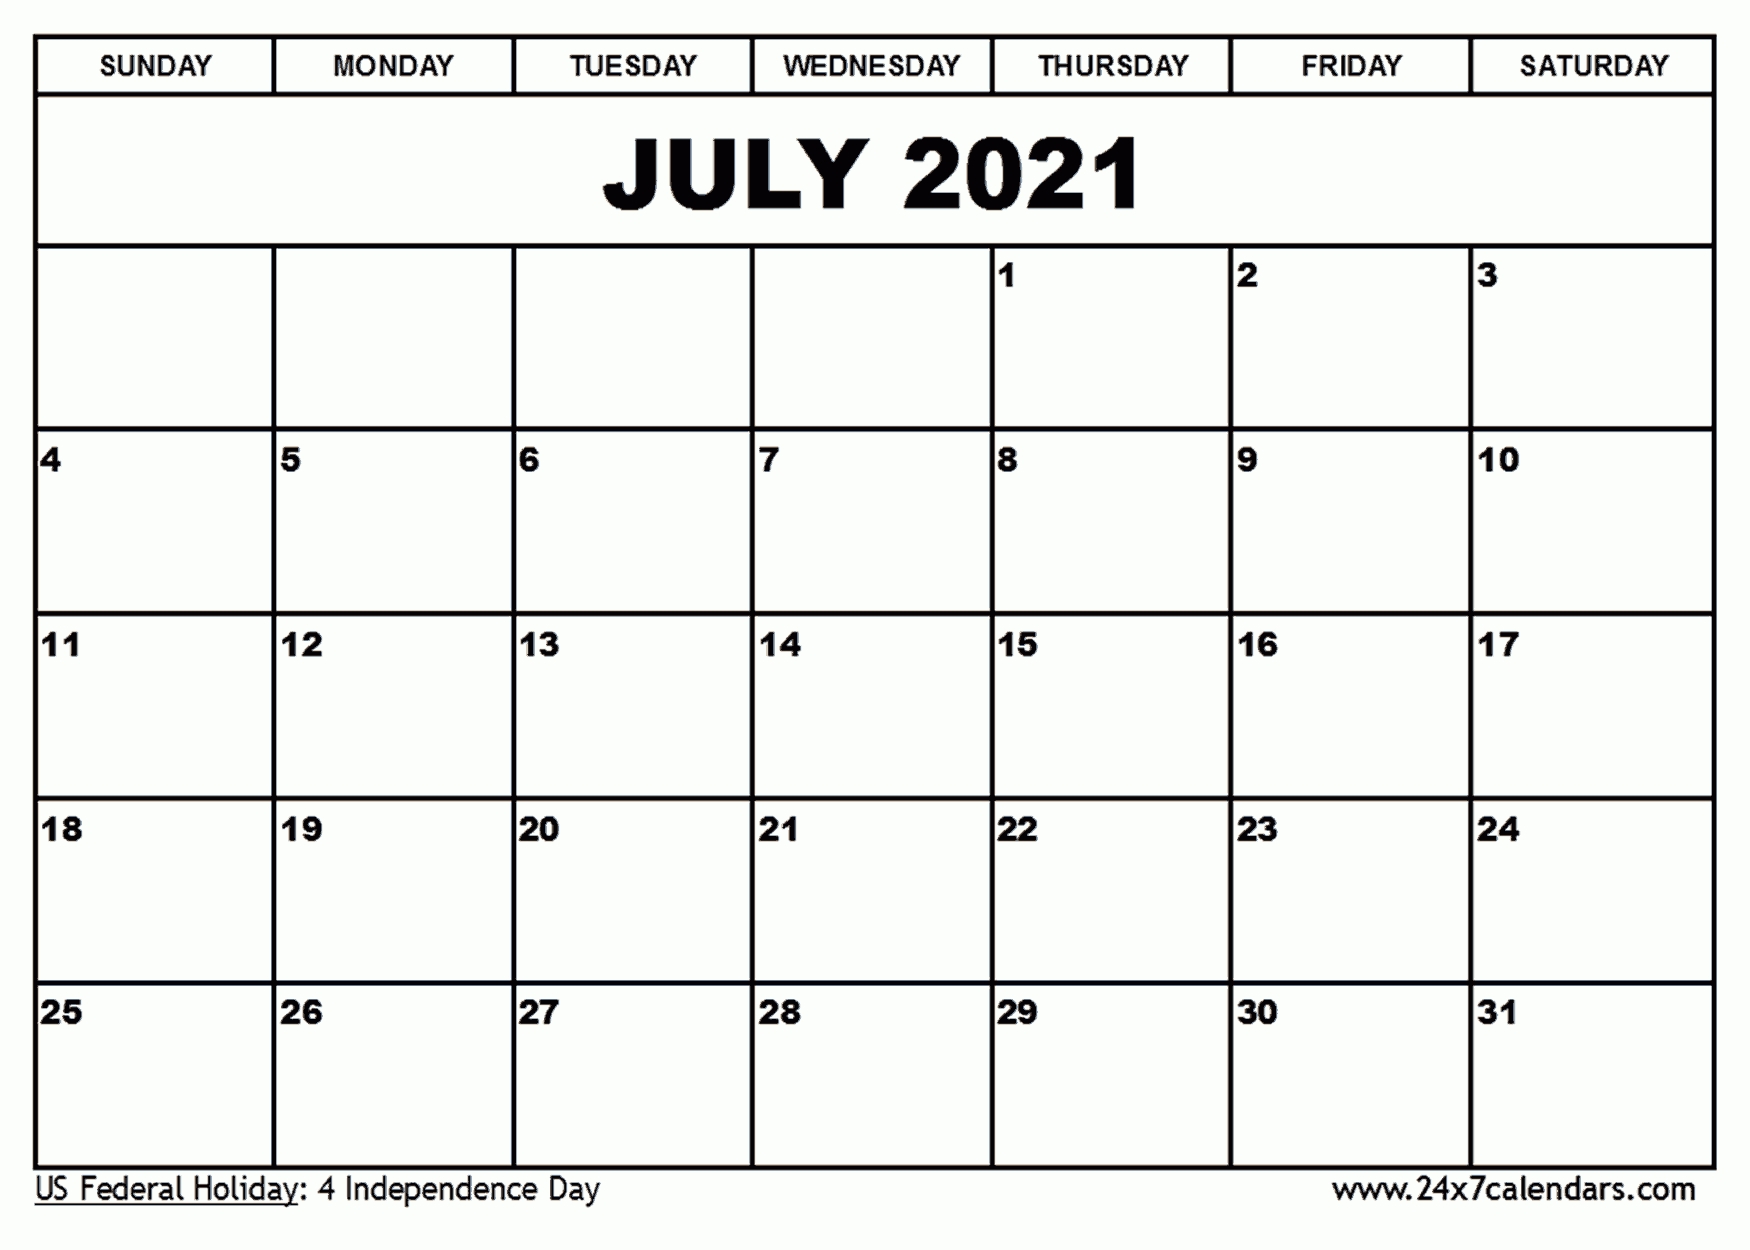 Free Printable July 2021 Calendar : 24x7calendars